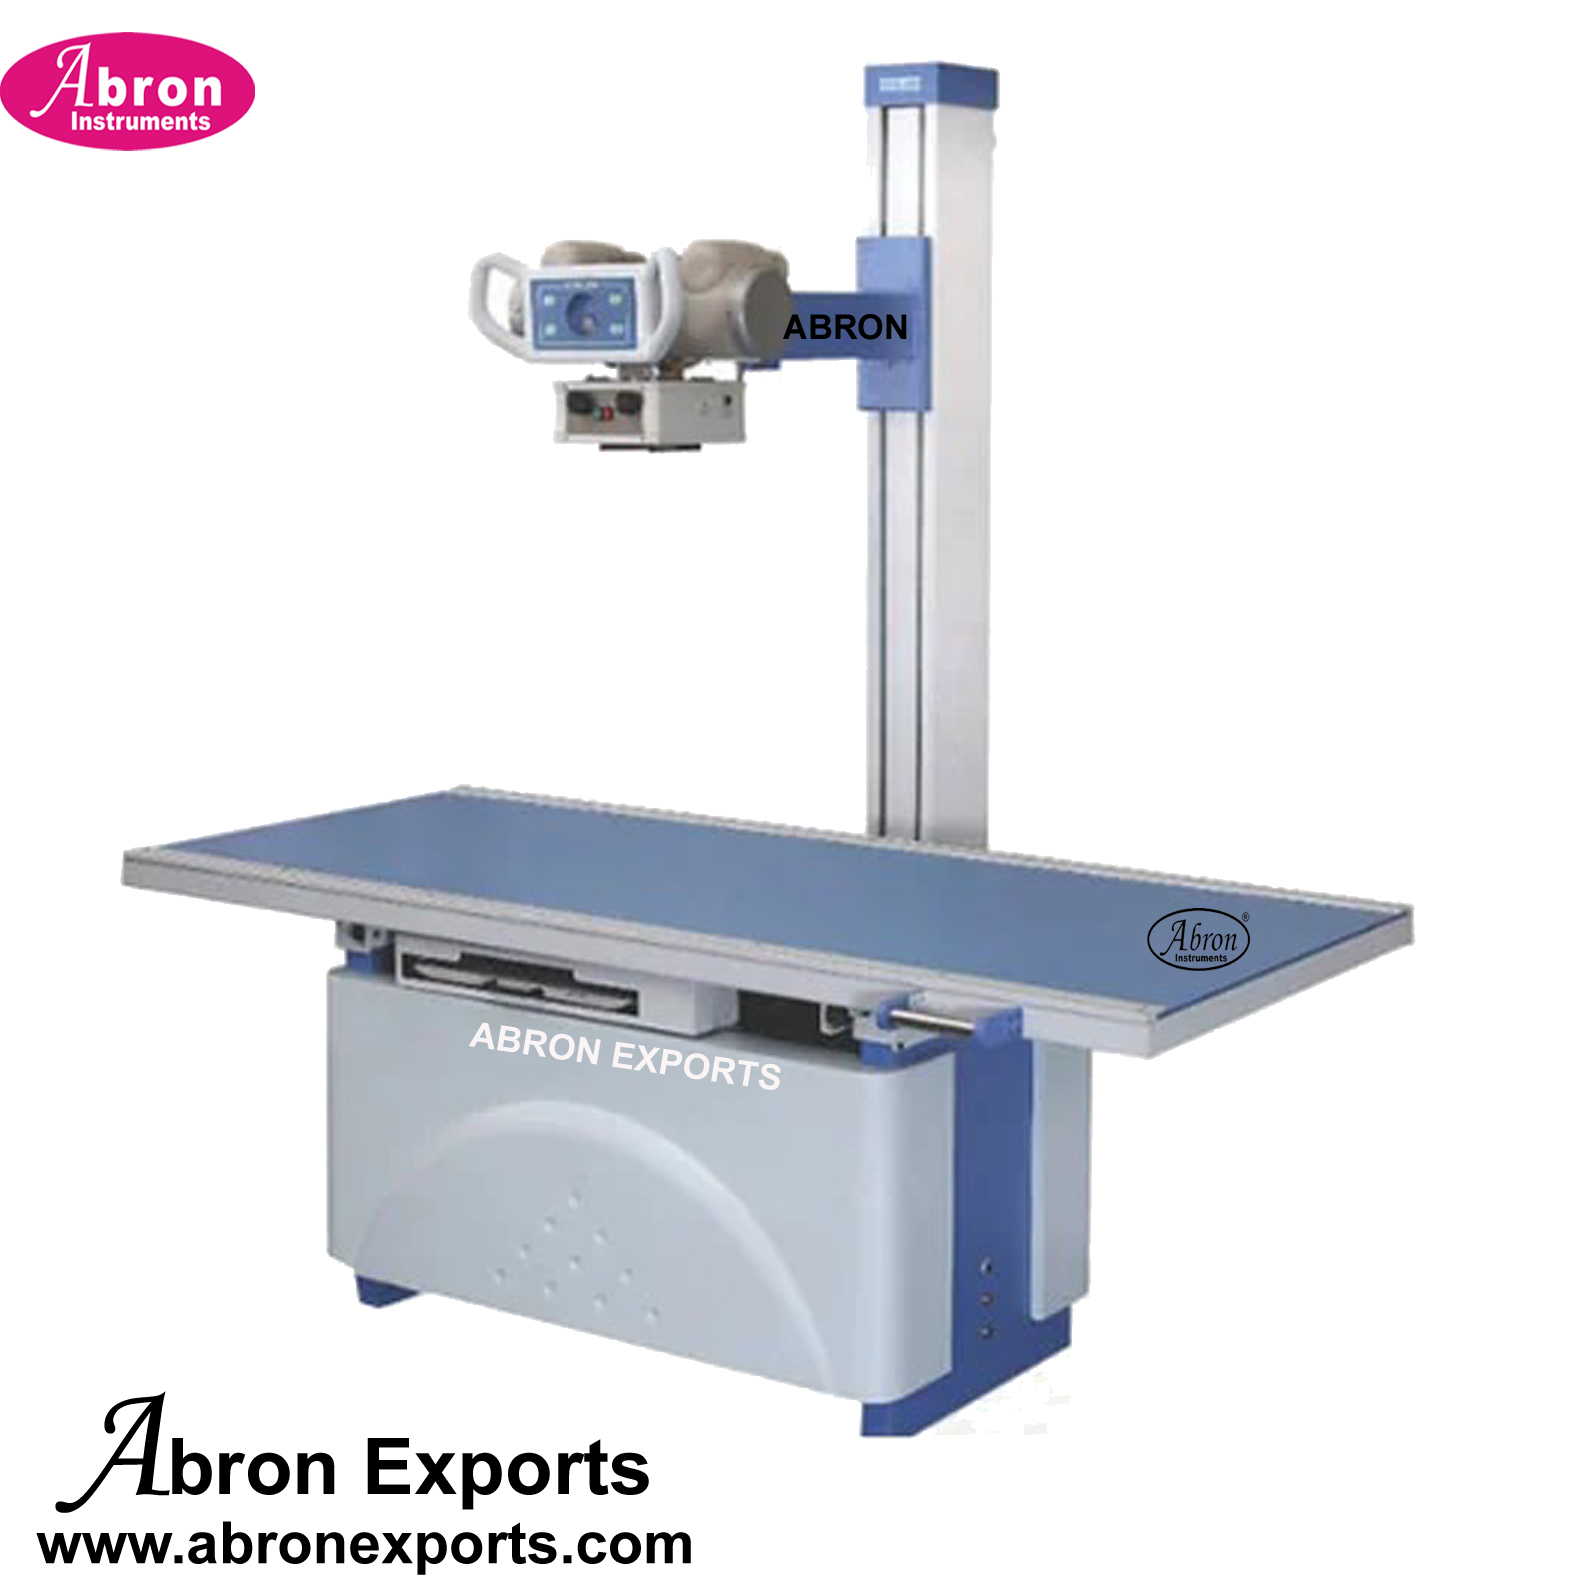 Ortho x-ray machine Digital 100mA with controller and stand platform setup Nursing Home Hospital Abron ABM-2783D1H 